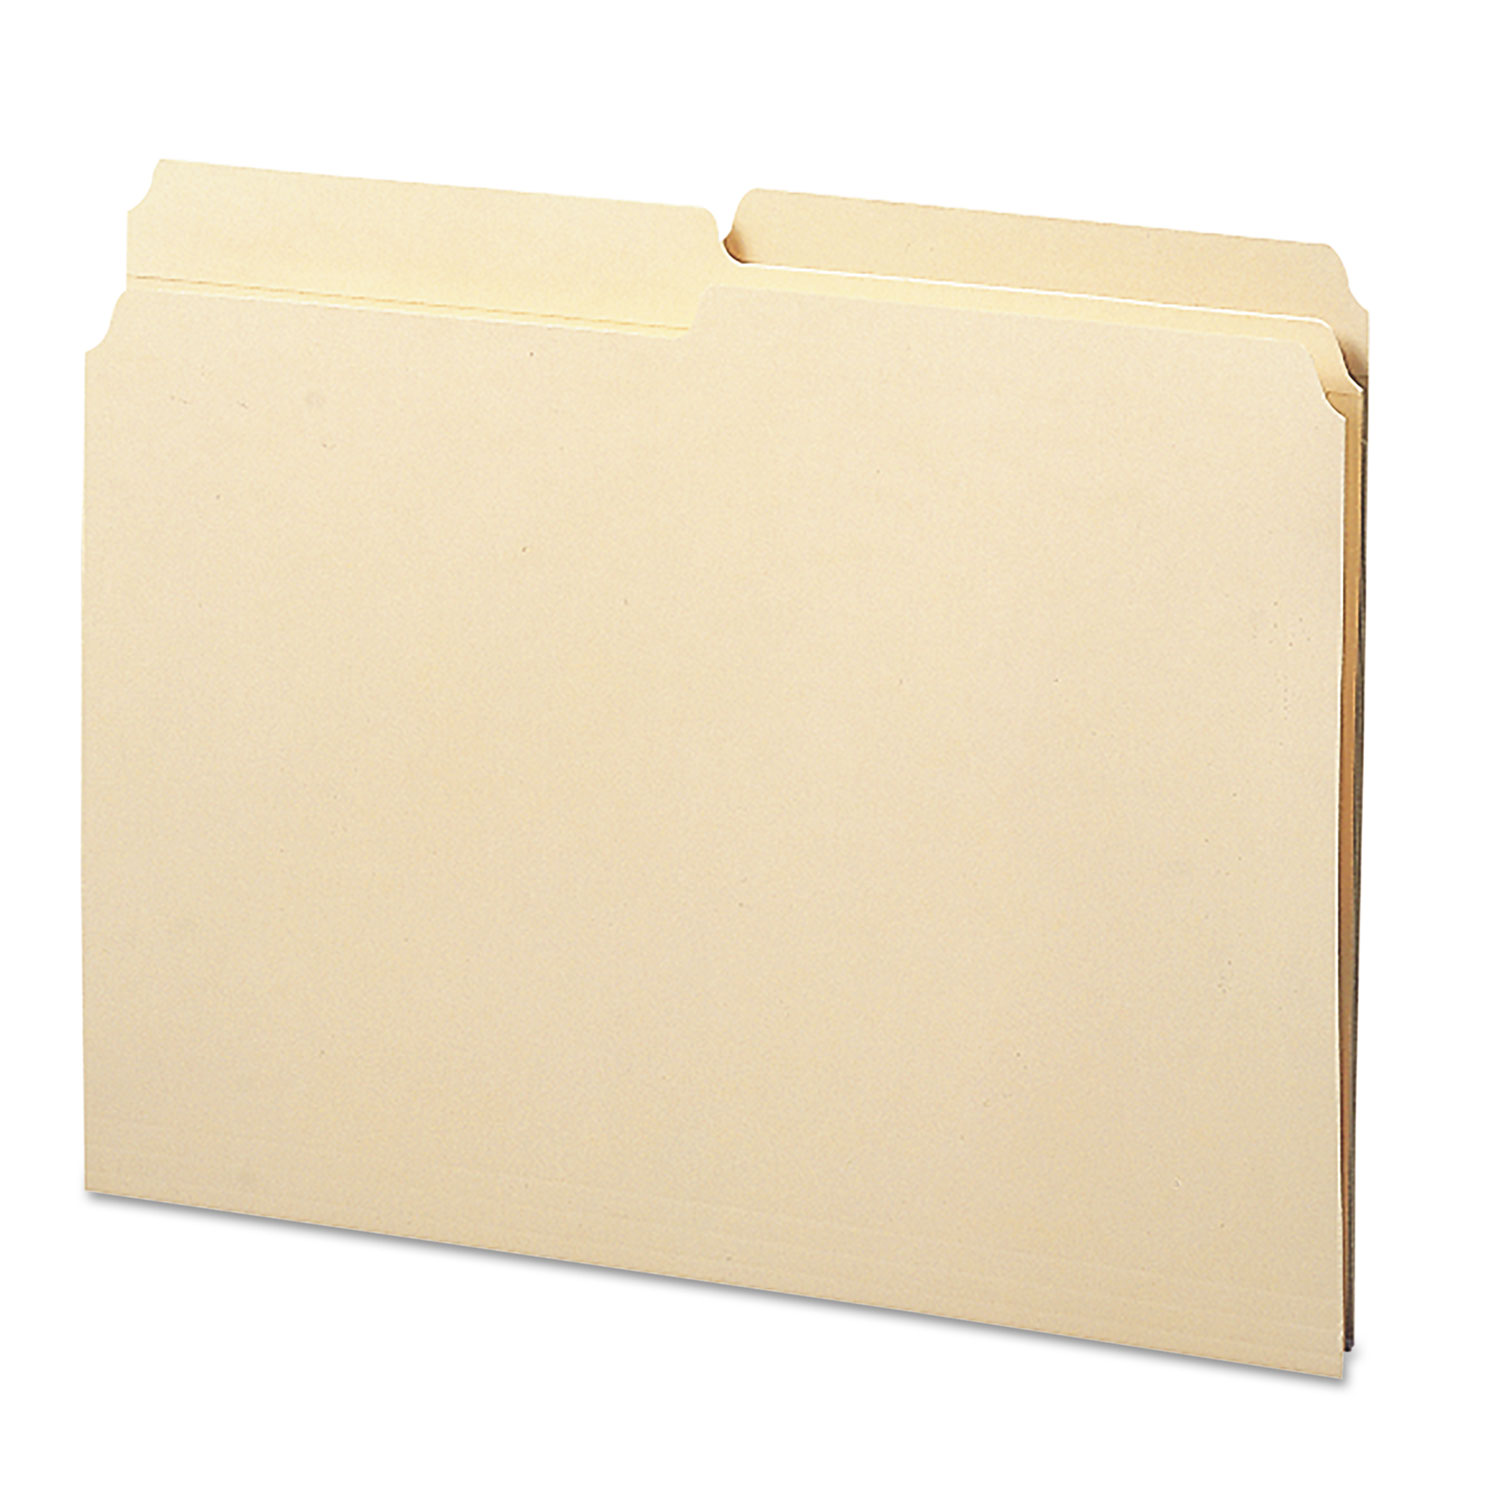  Smead 10326 Reinforced Tab Manila File Folders, 1/2-Cut Tabs, Letter Size, 11 pt. Manila, 100/Box (SMD10326) 